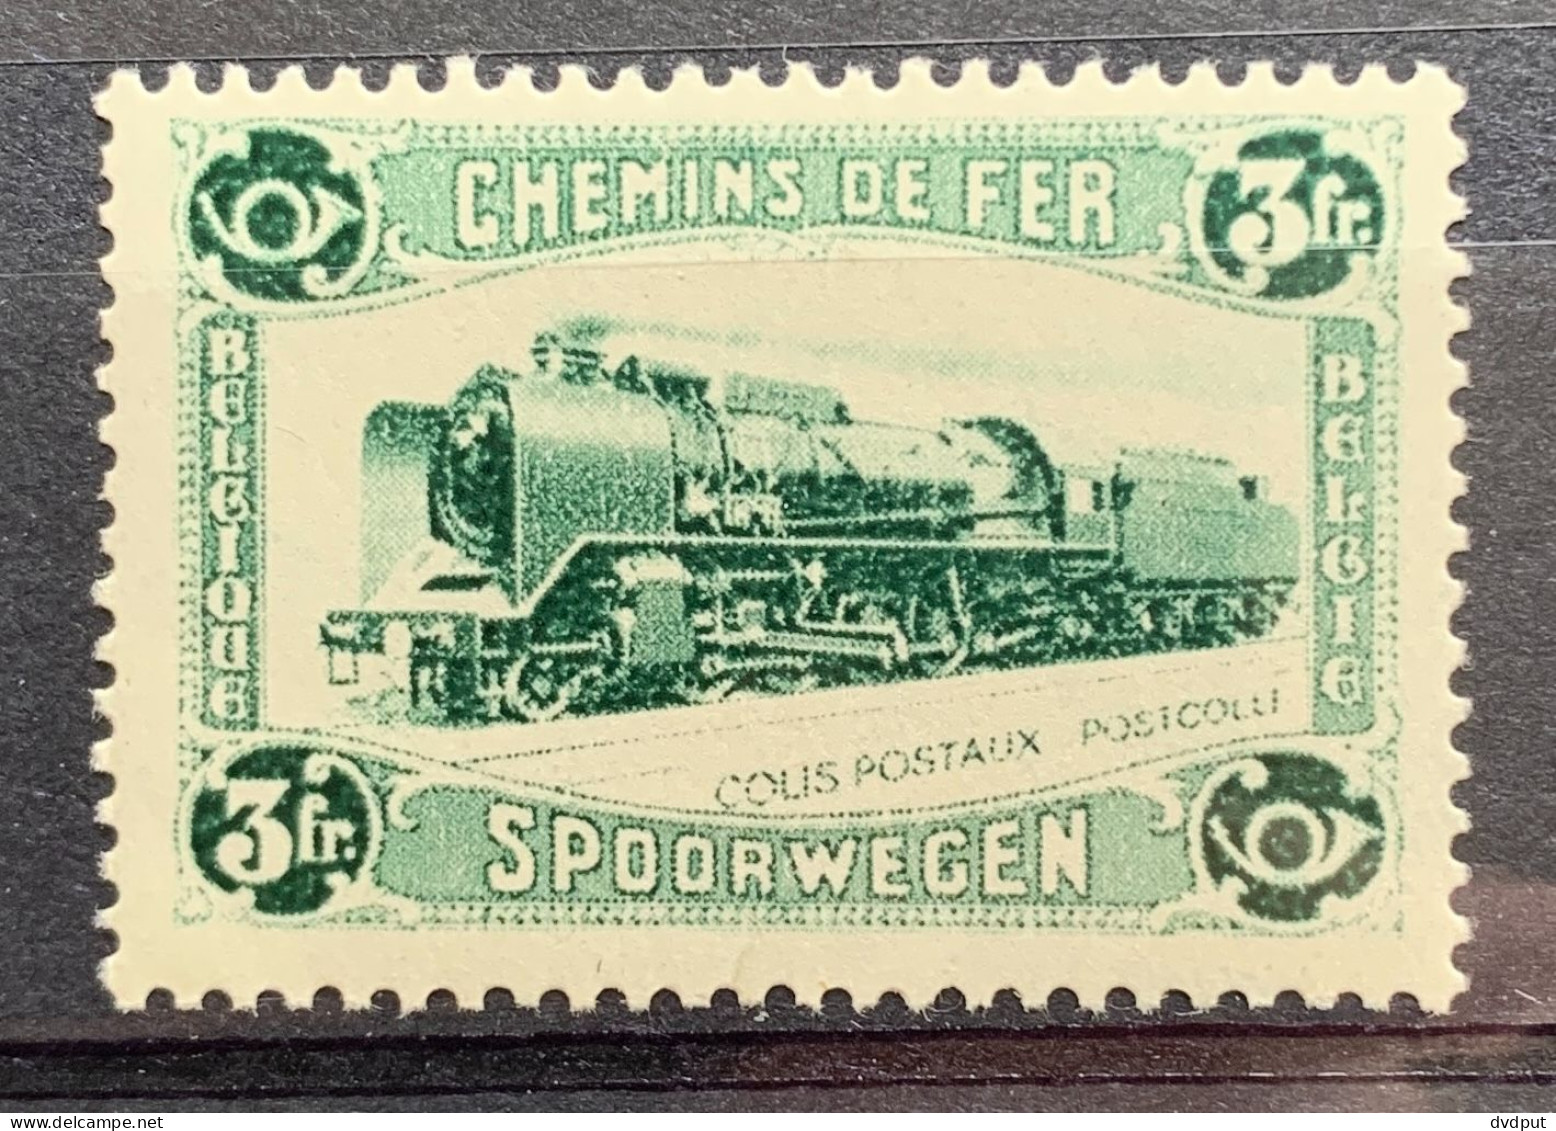 België, 1934, TR175, Postfris**, OBP 55€ - Mint